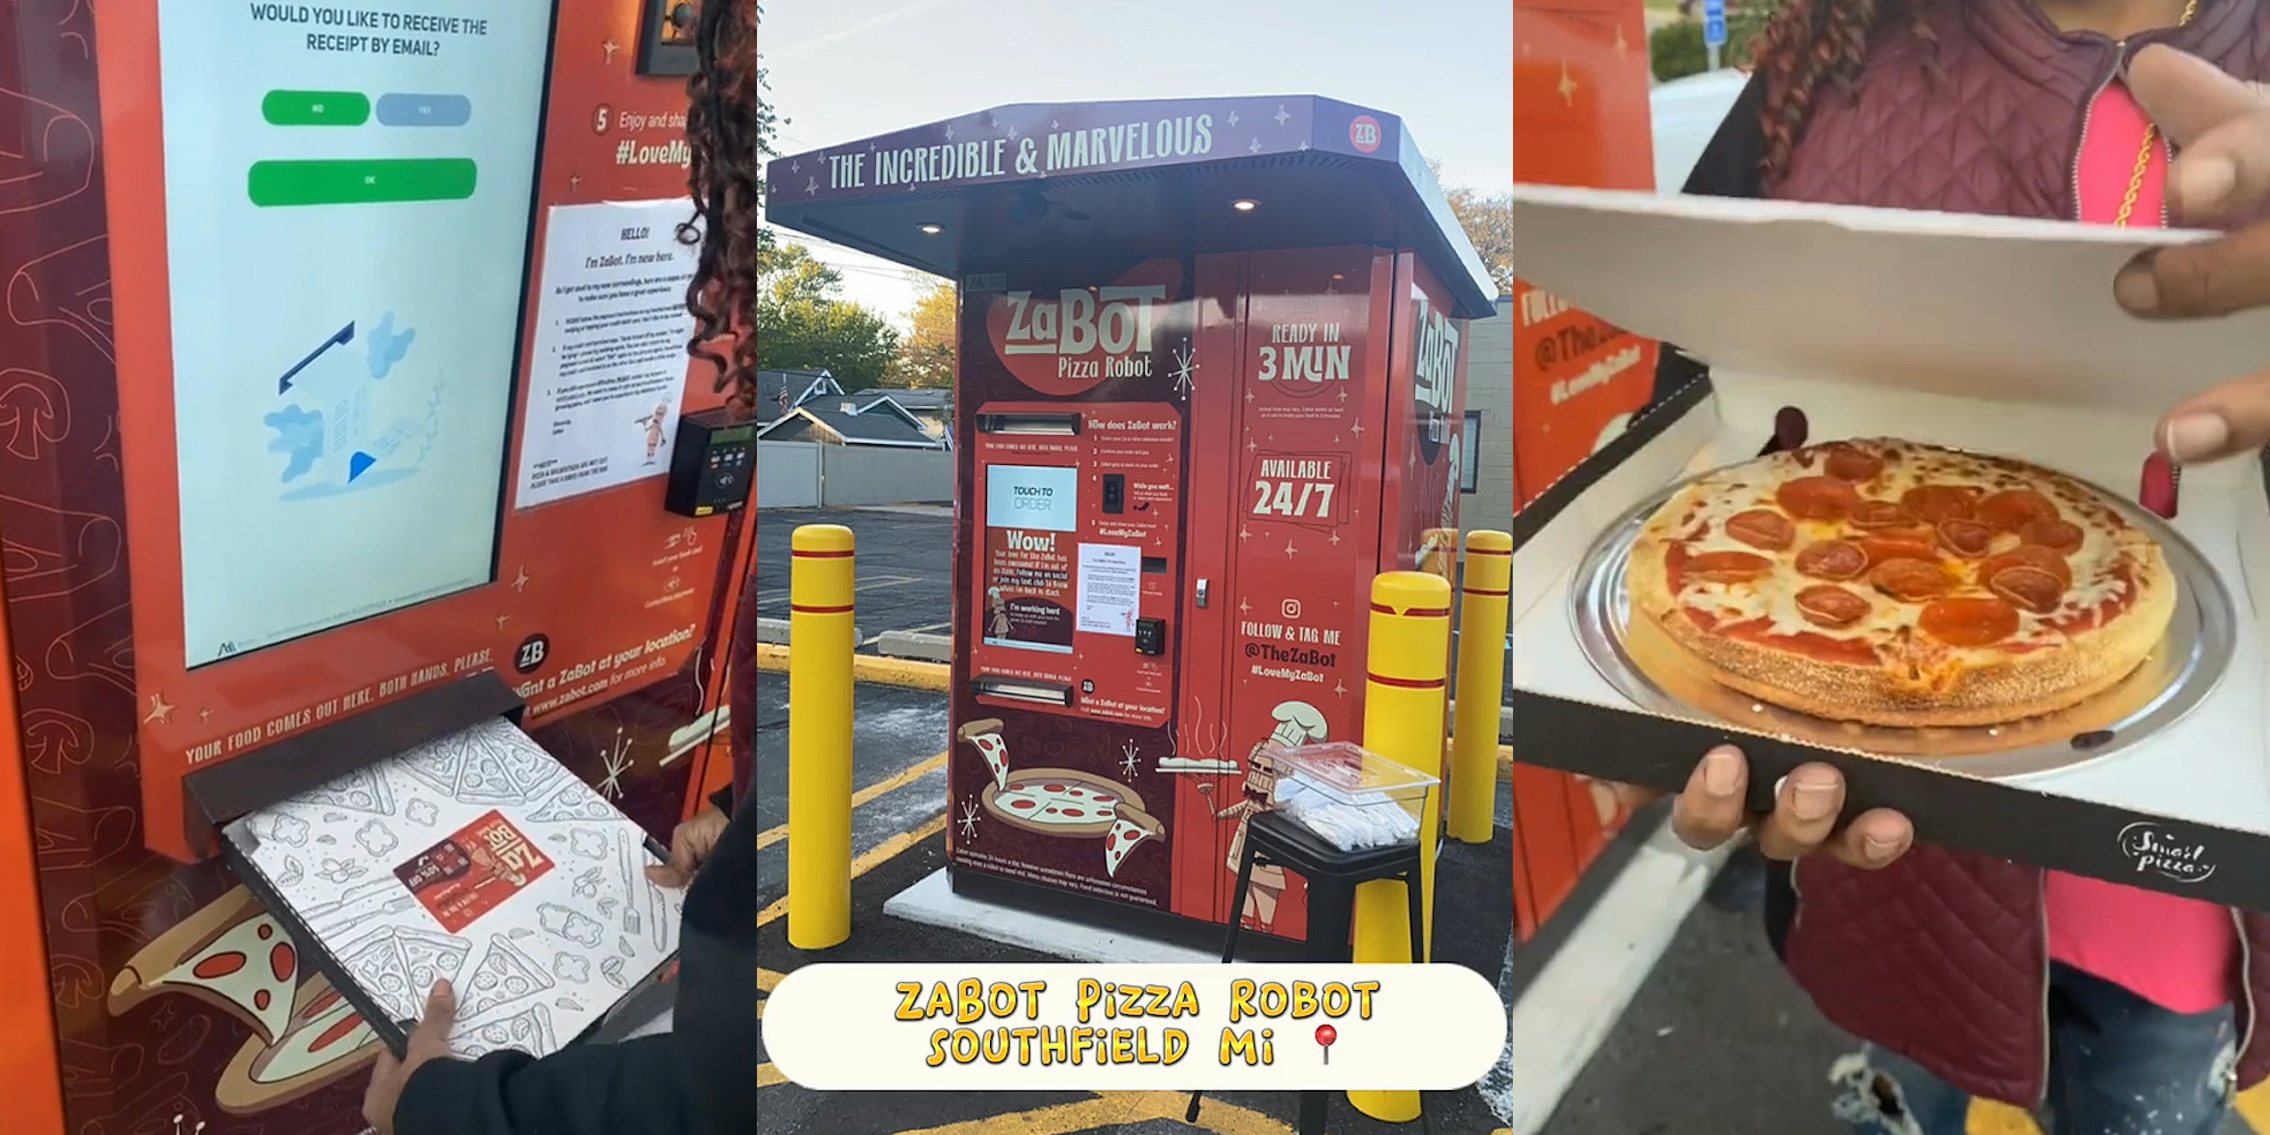 woman pulling pizza box out of slot in Zabot pizza robot (l) Zabot pizza robot in parking lot with caption 'Zabot Pizza Robot Southfield Mi' (c) woman pulling top to pizza box up revealing pizza (r)